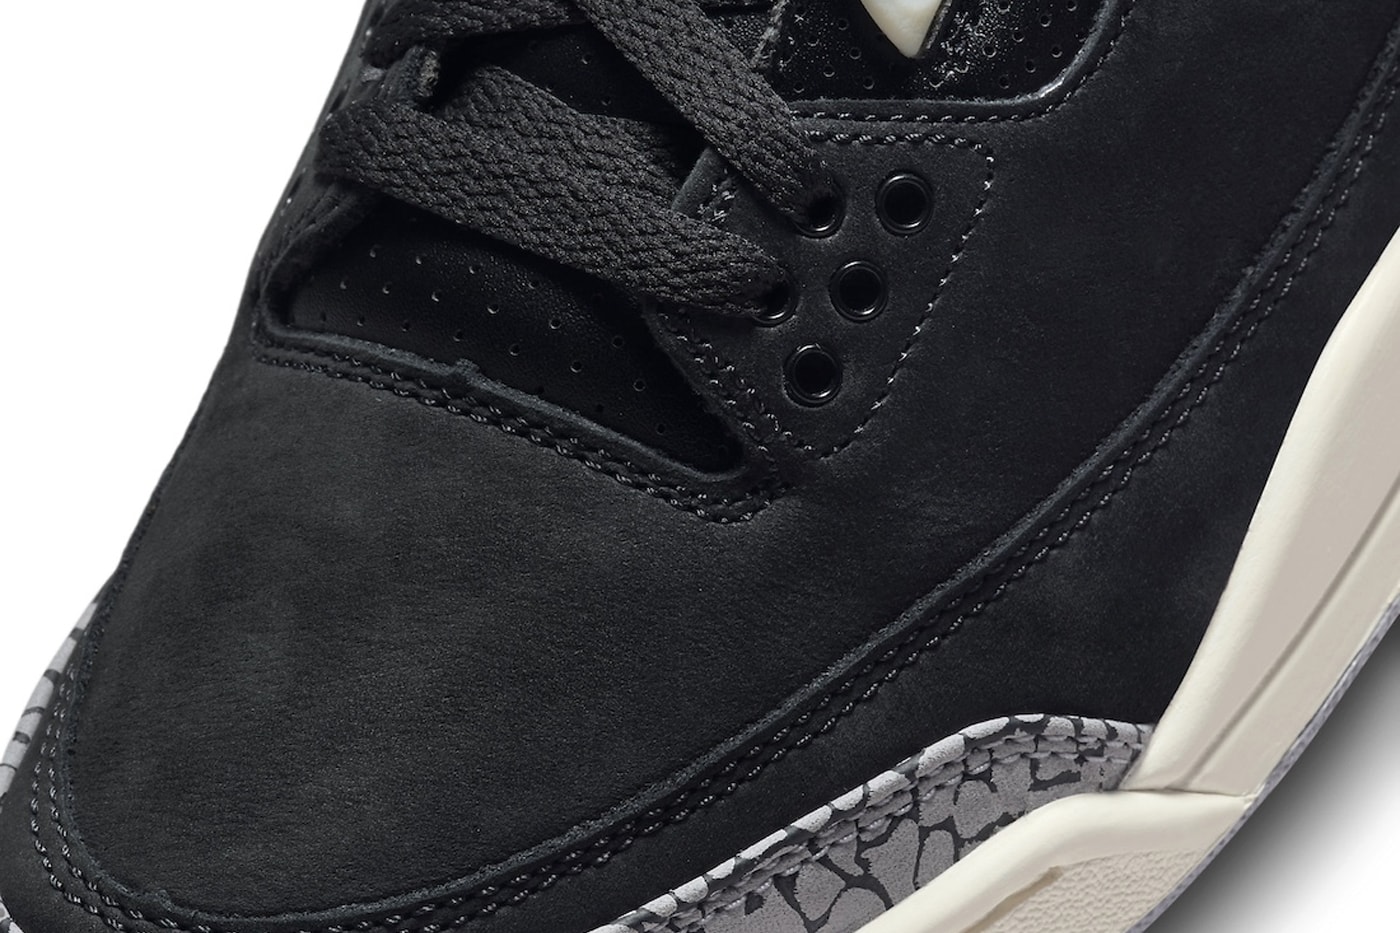 Air Jordan 3 "Off Noir" Is Slated to Release This Month CK9246-001 Off Noir/Black-Coconut Milk-Cement Grey michael jordan brand swoosh jumpman nike